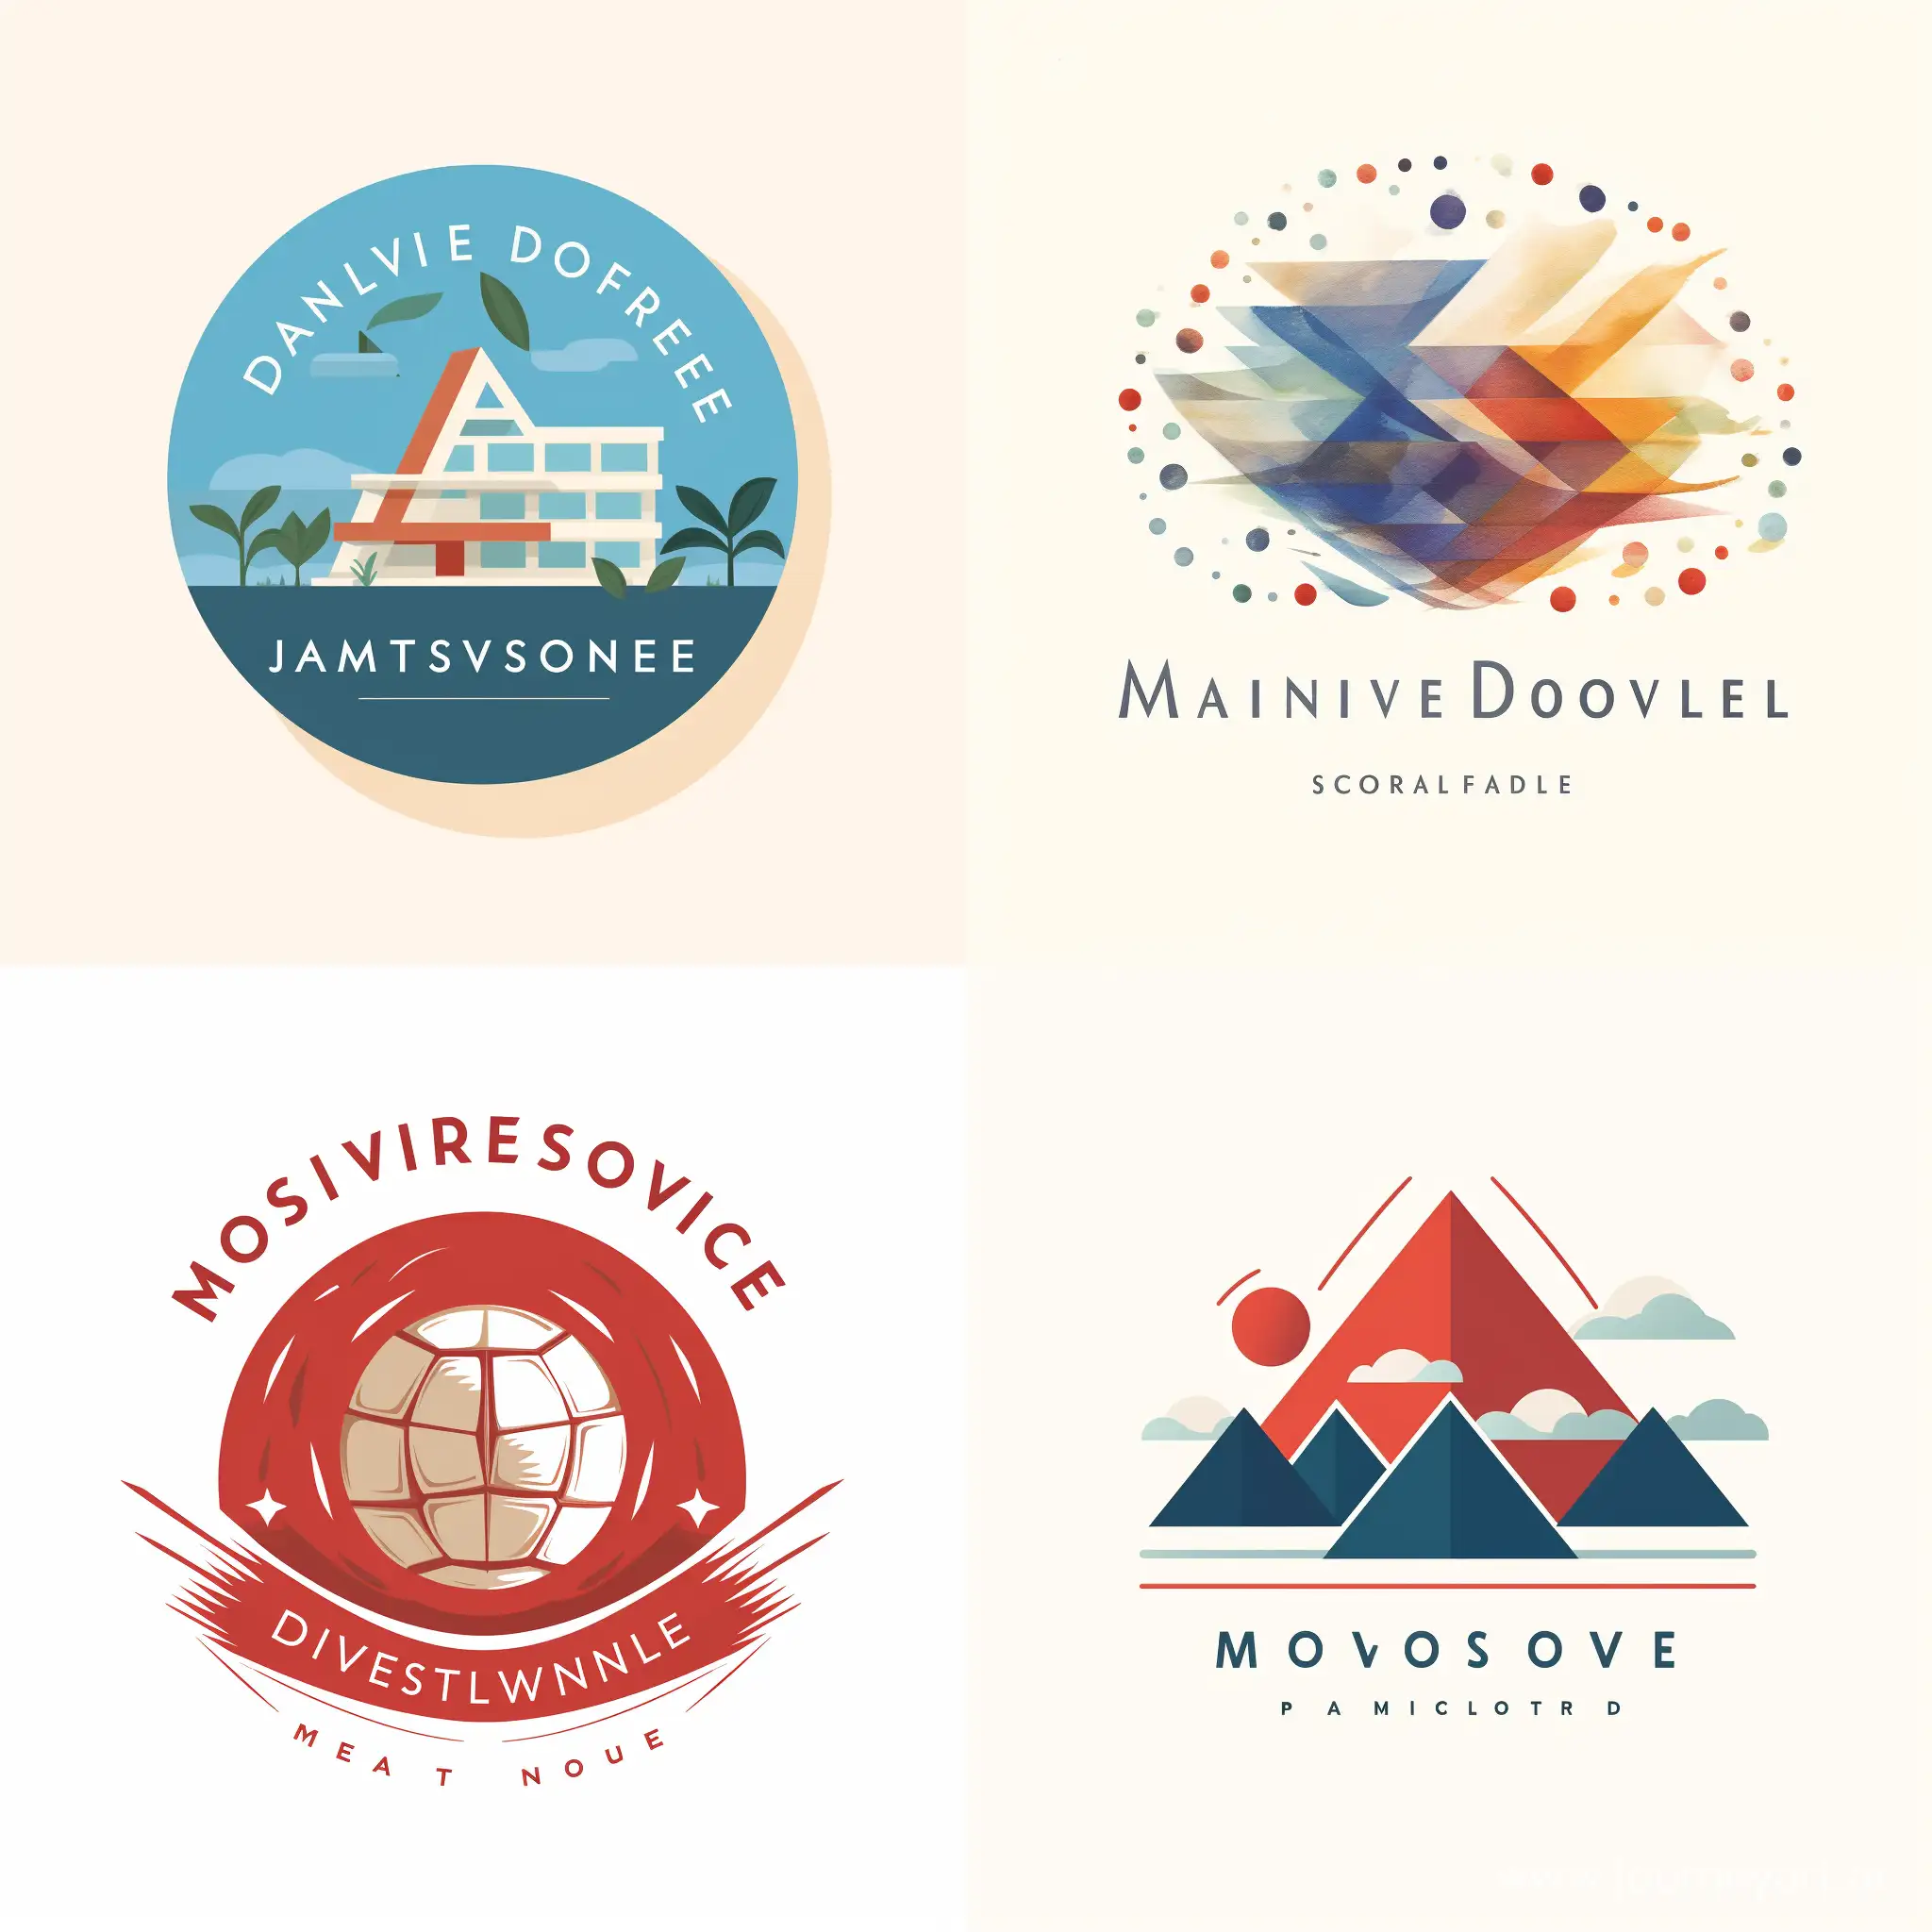 Montessori-School-Davie-Logo-Design-with-a-Balanced-Harmony